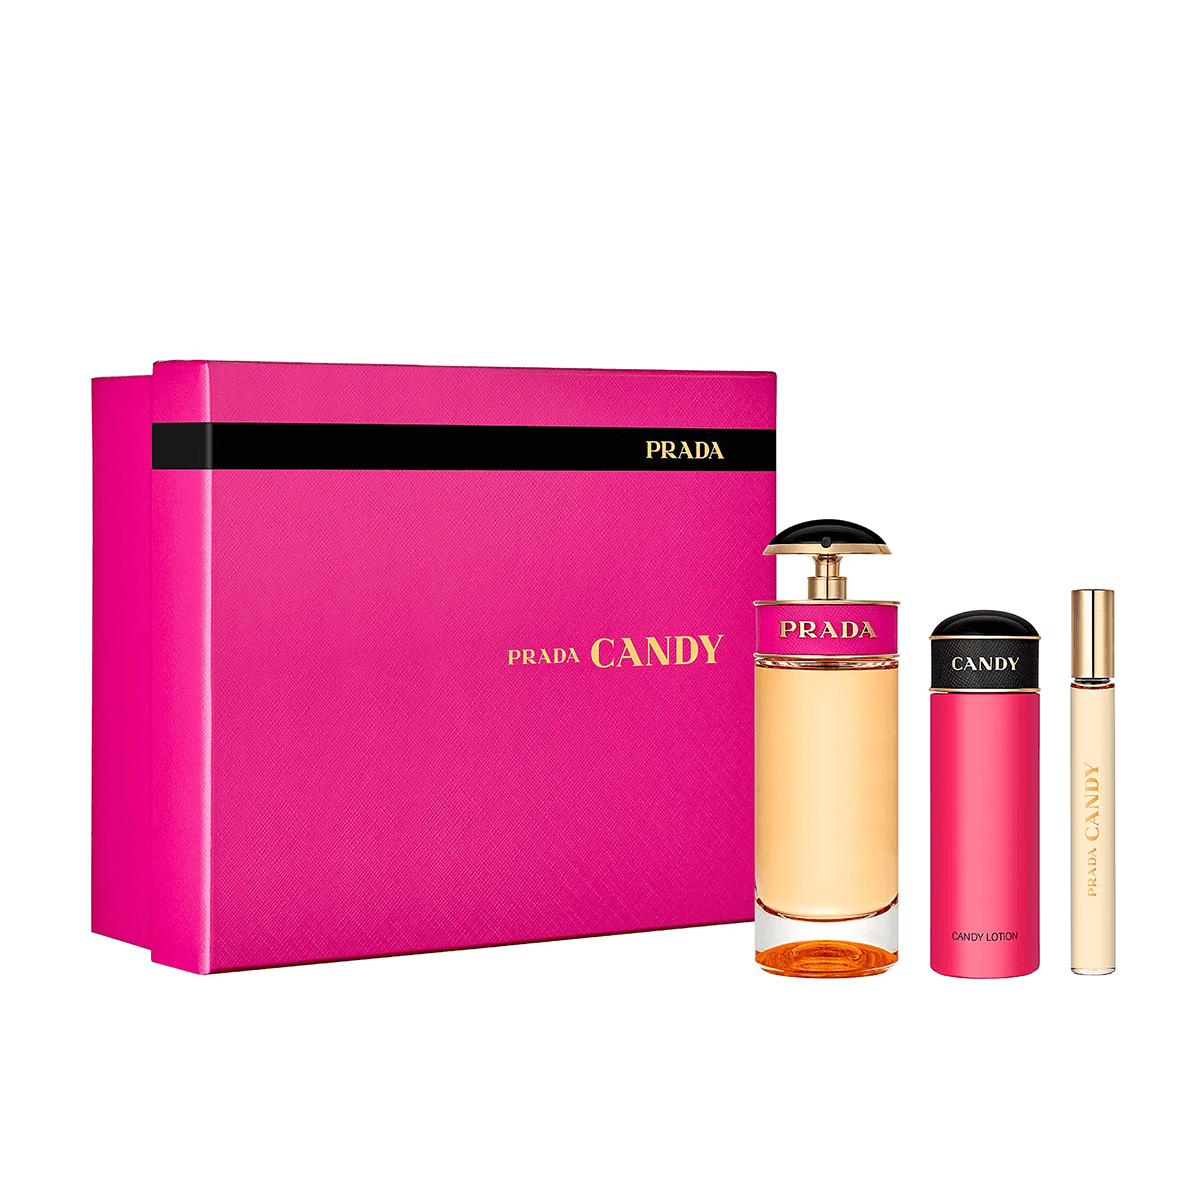 Prada Candy EDP Deluxe Gift Set | My Perfume Shop Australia